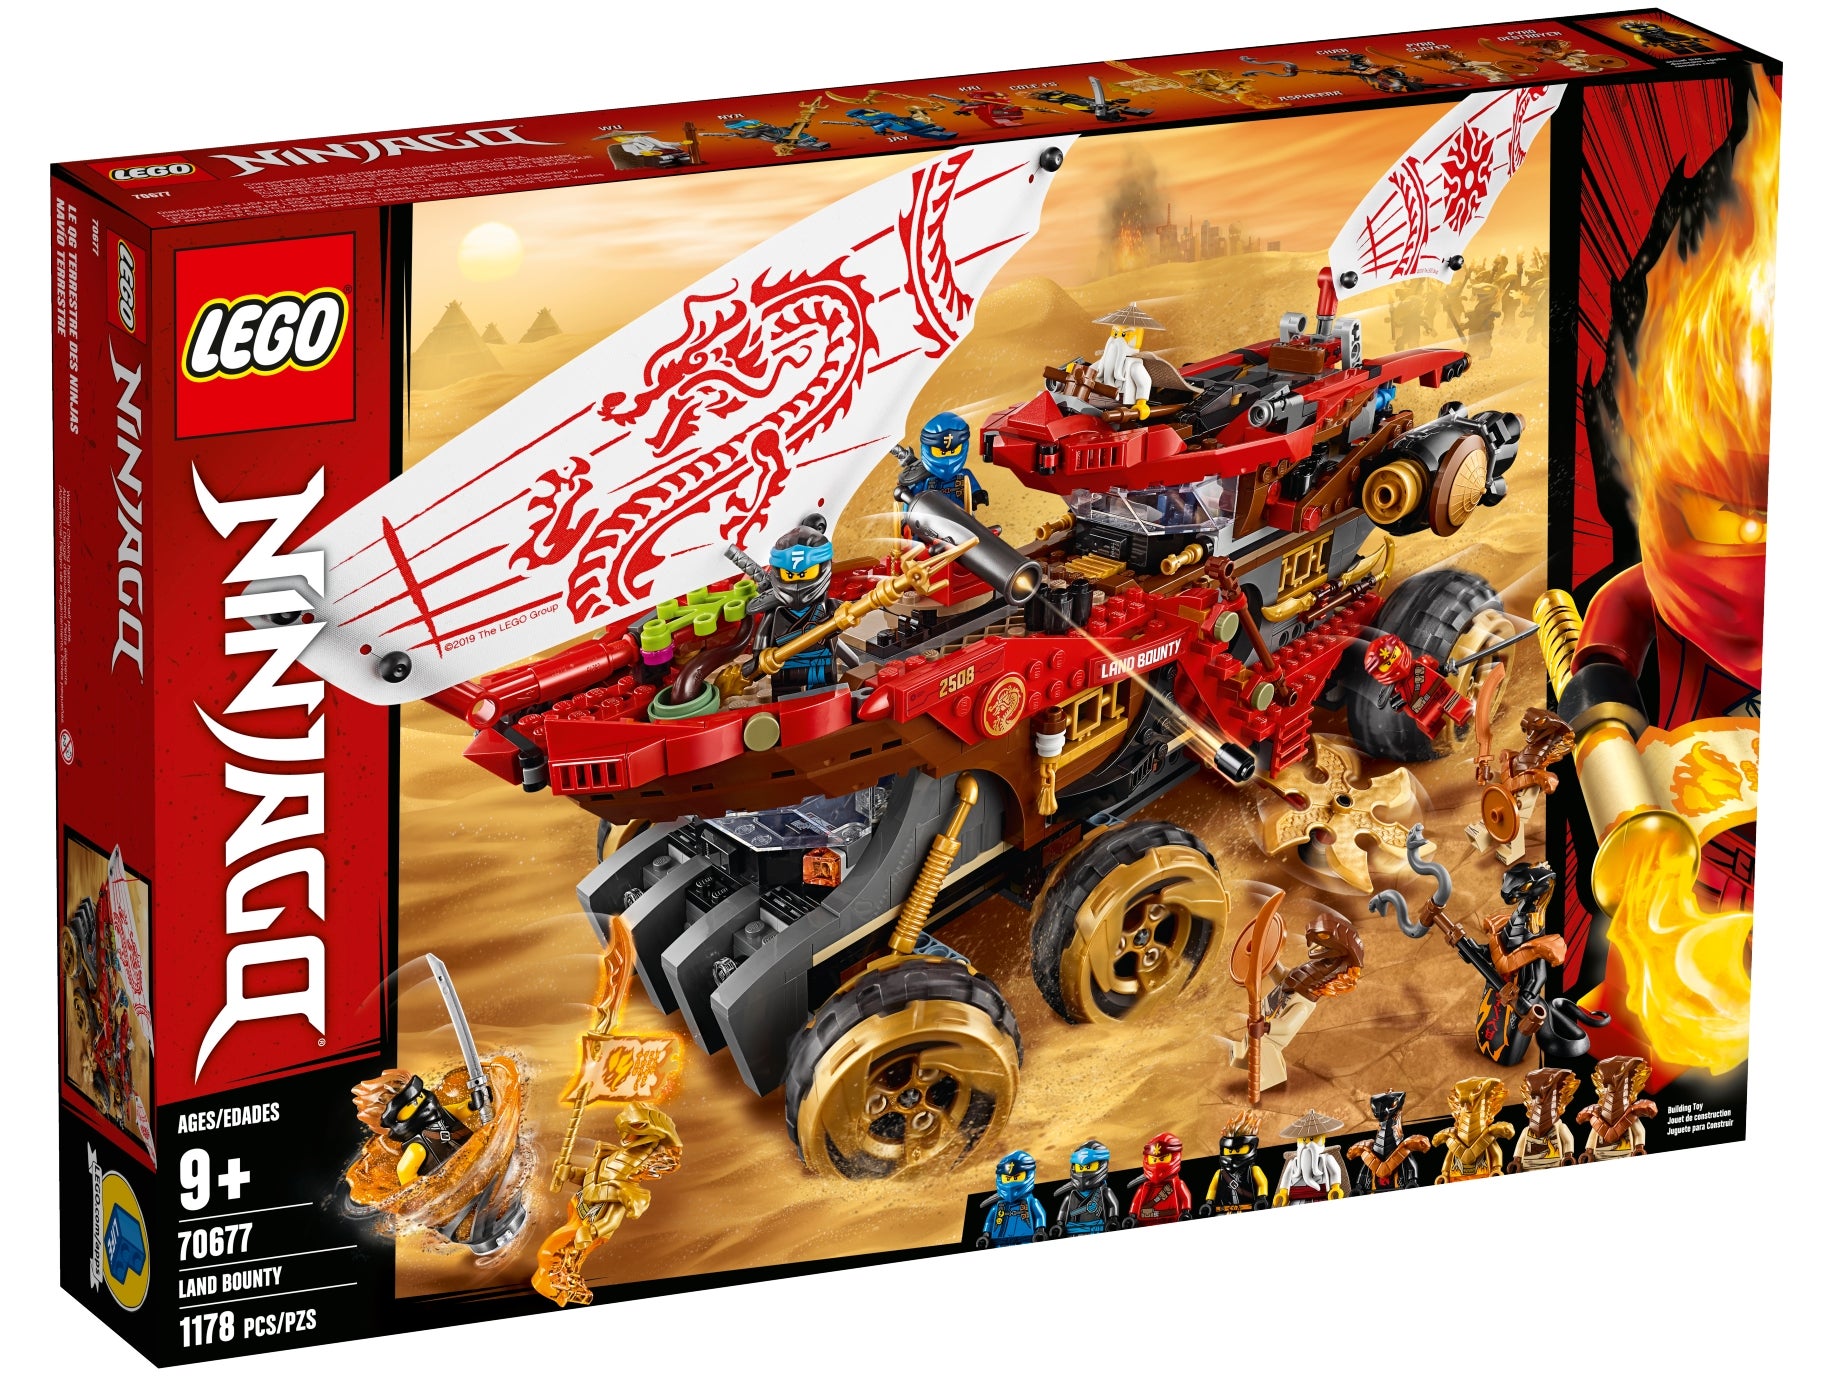 LEGO Land Bounty Ninjago 70677 for sale online